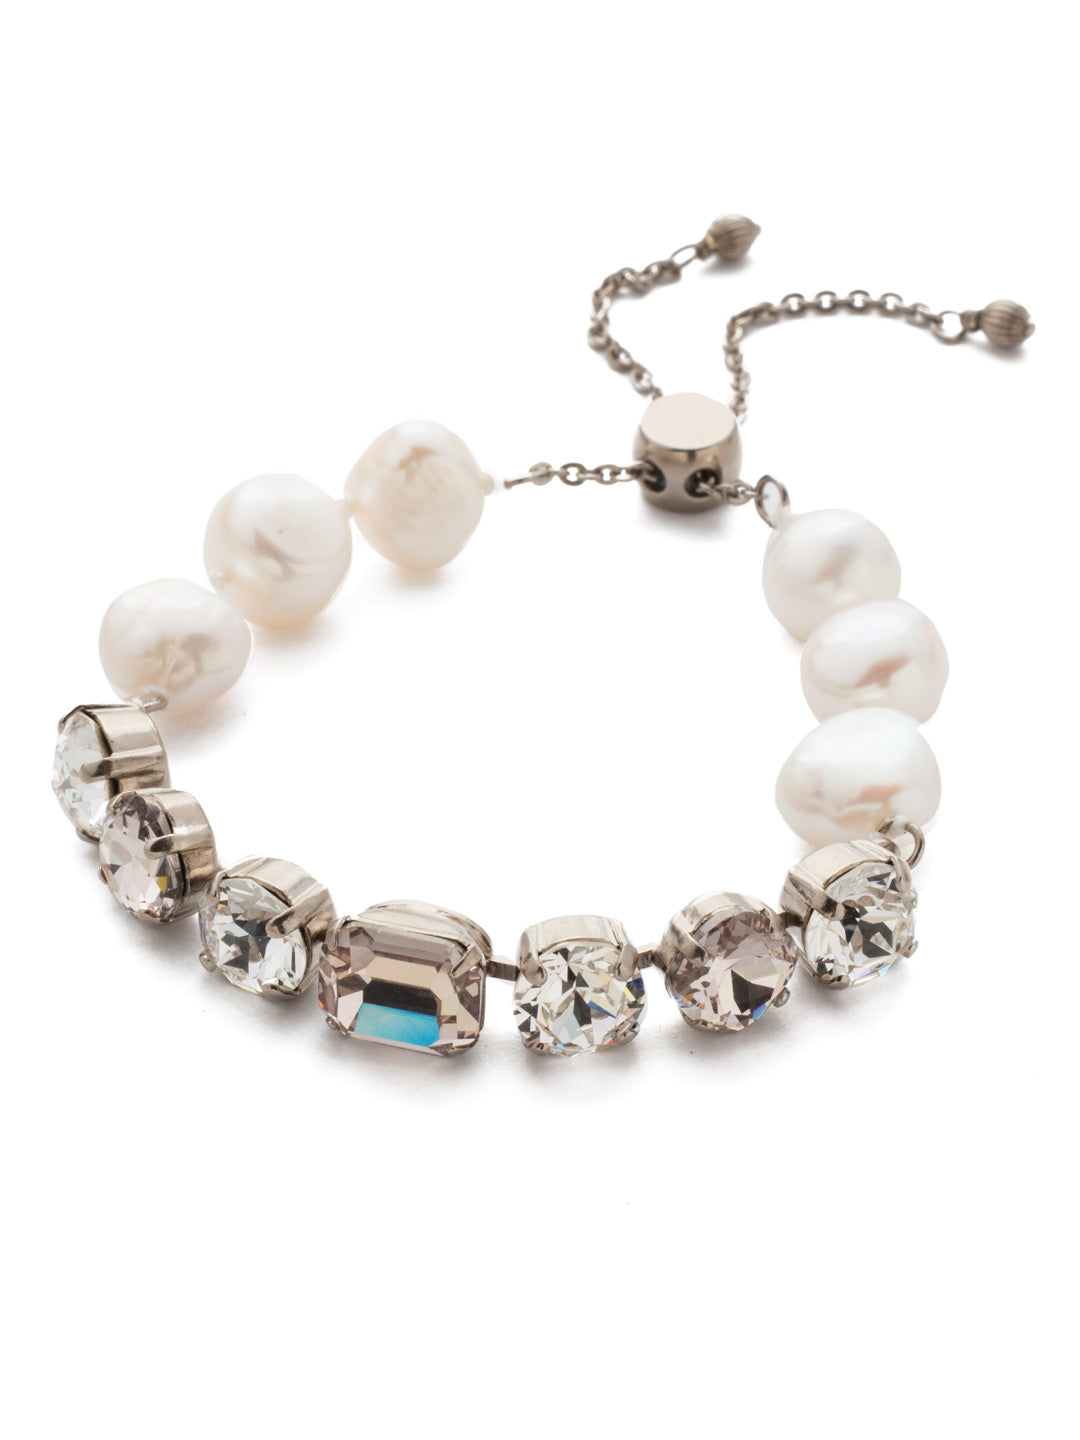 Cadenza Slider Bracelet - BEC14ASPLS - A classic line bracelet reimagined with a adjustable slider clasp. A pattern of crystals and pearls give this bracelet all around allure.